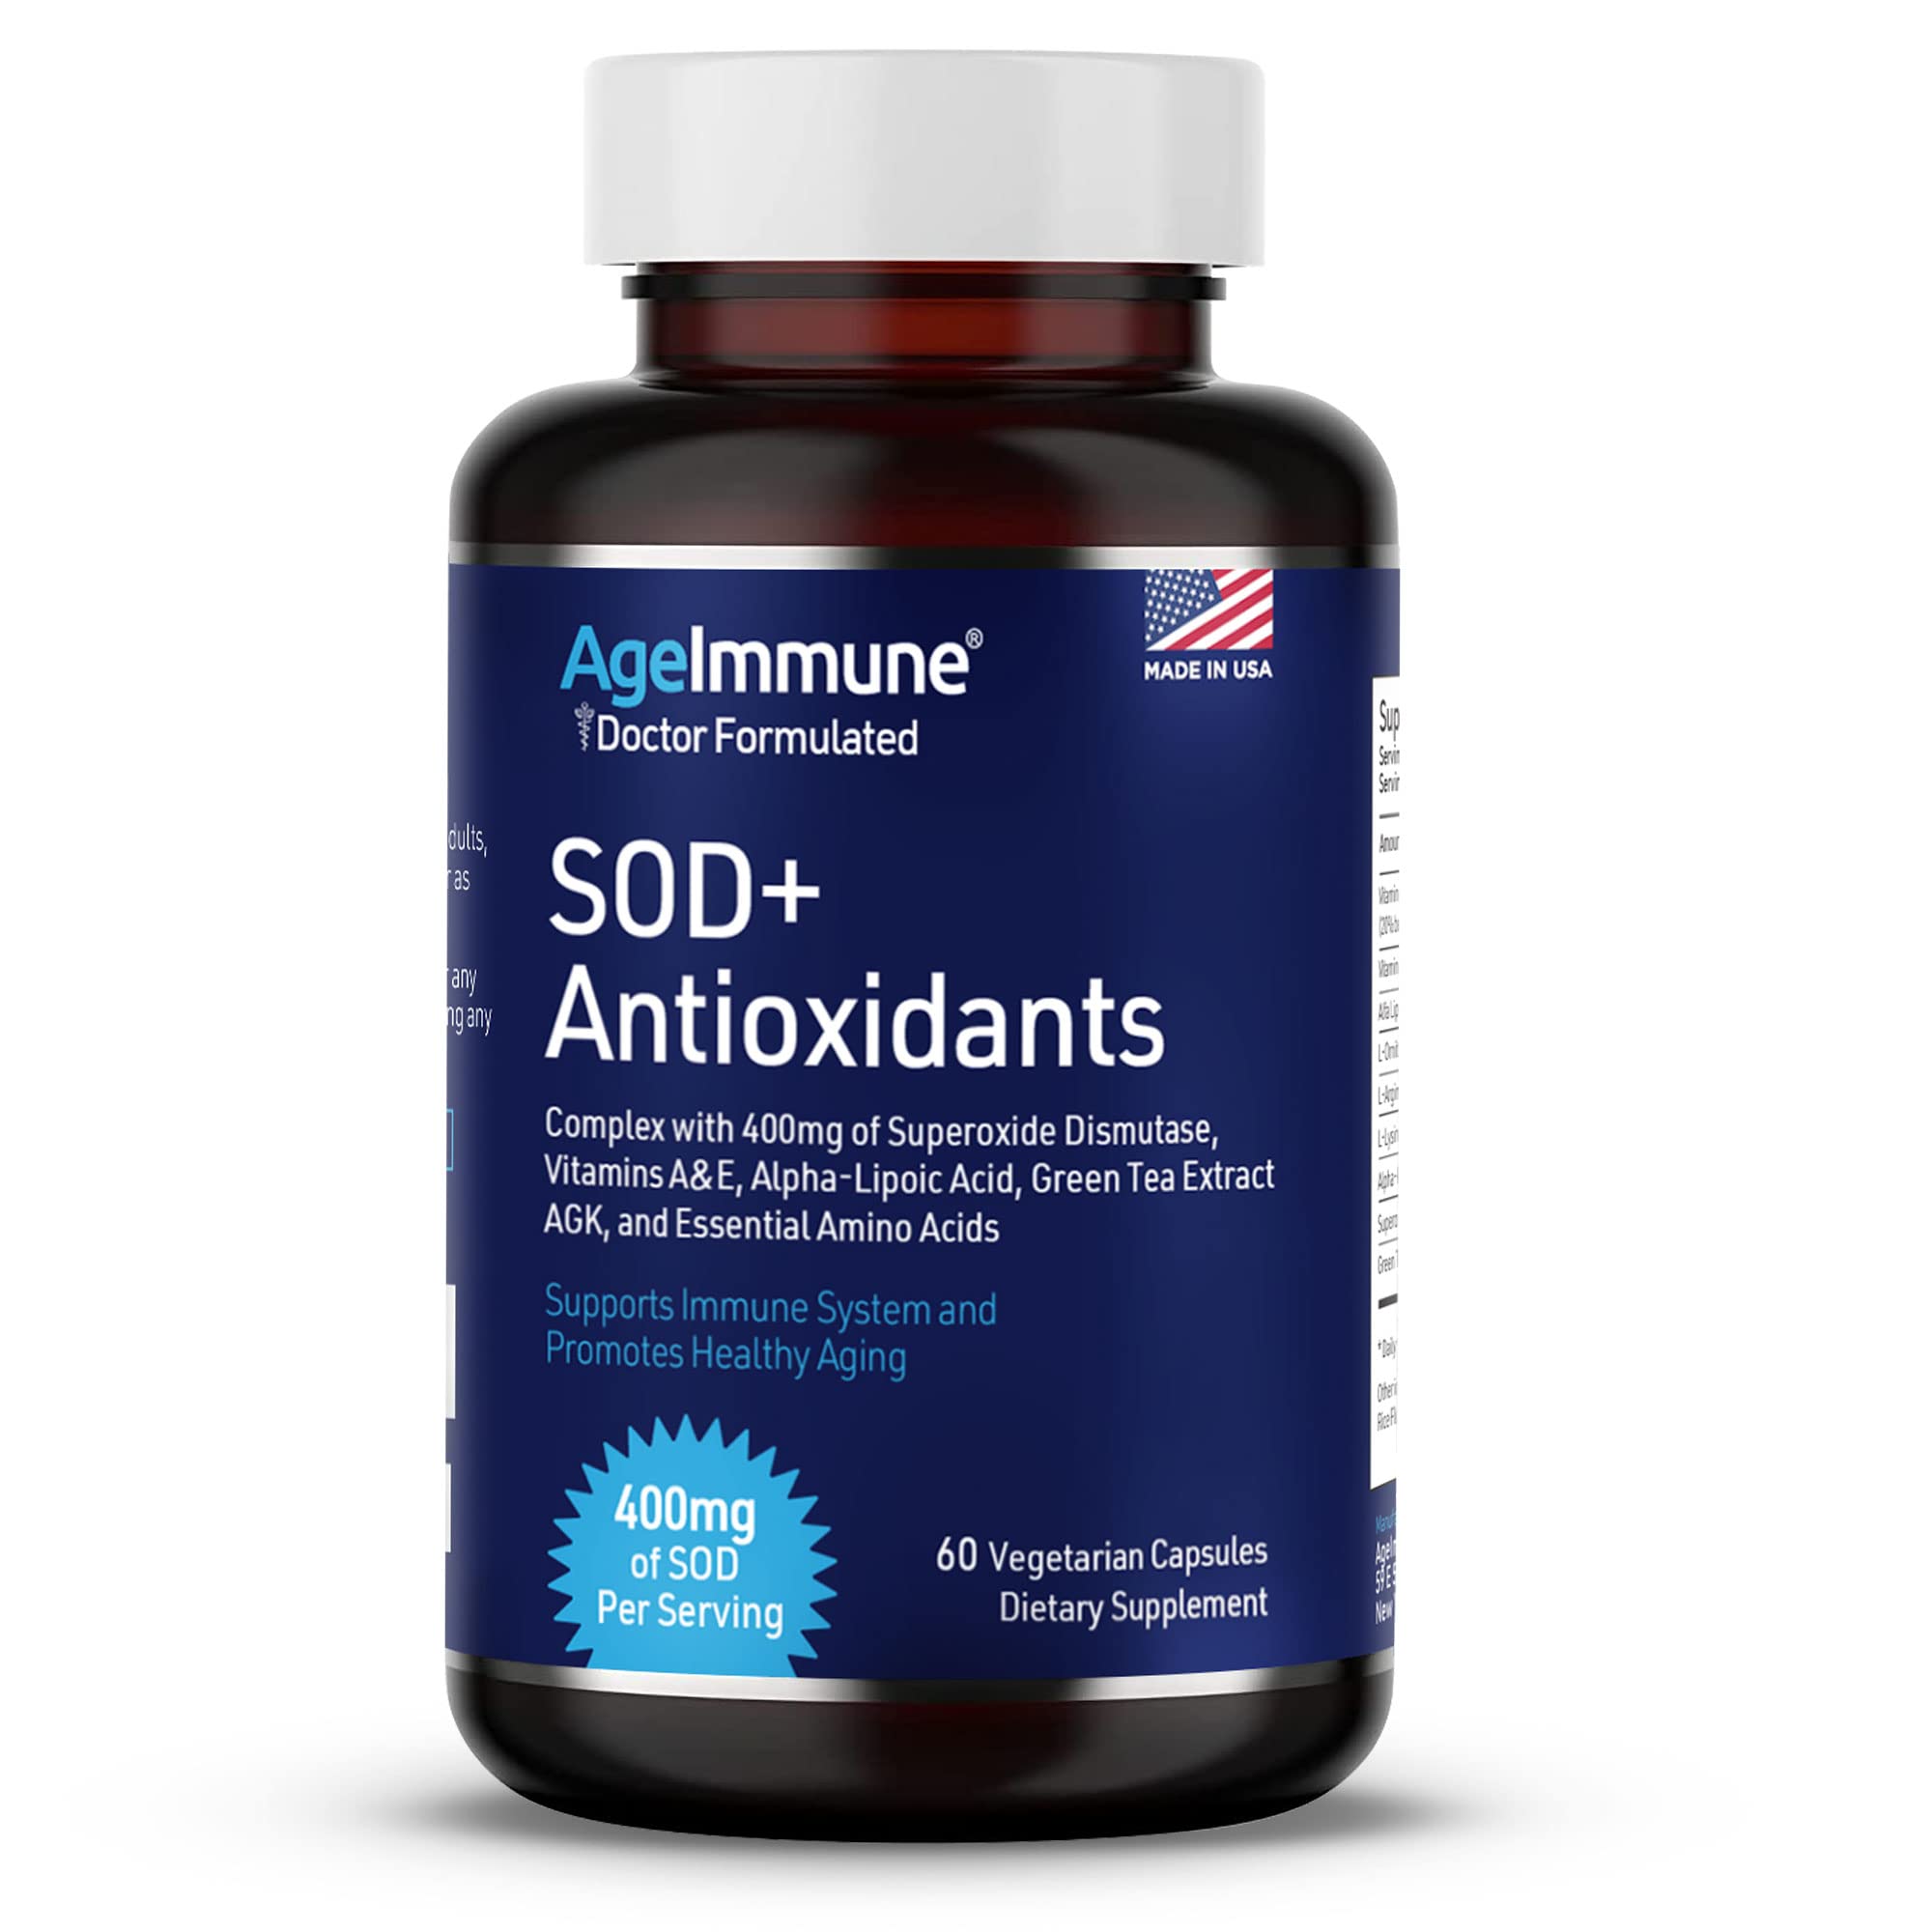 SOD Antioxidants Complex Healthy Aging Supplement, 400mg of Superoxide Dismutase, Alpha Lipoic Acid, Green Tea Extract, L-Arginine, Lysine, AKG, Vitamin A, Vitamin E for Immune Support (60 Capsules)